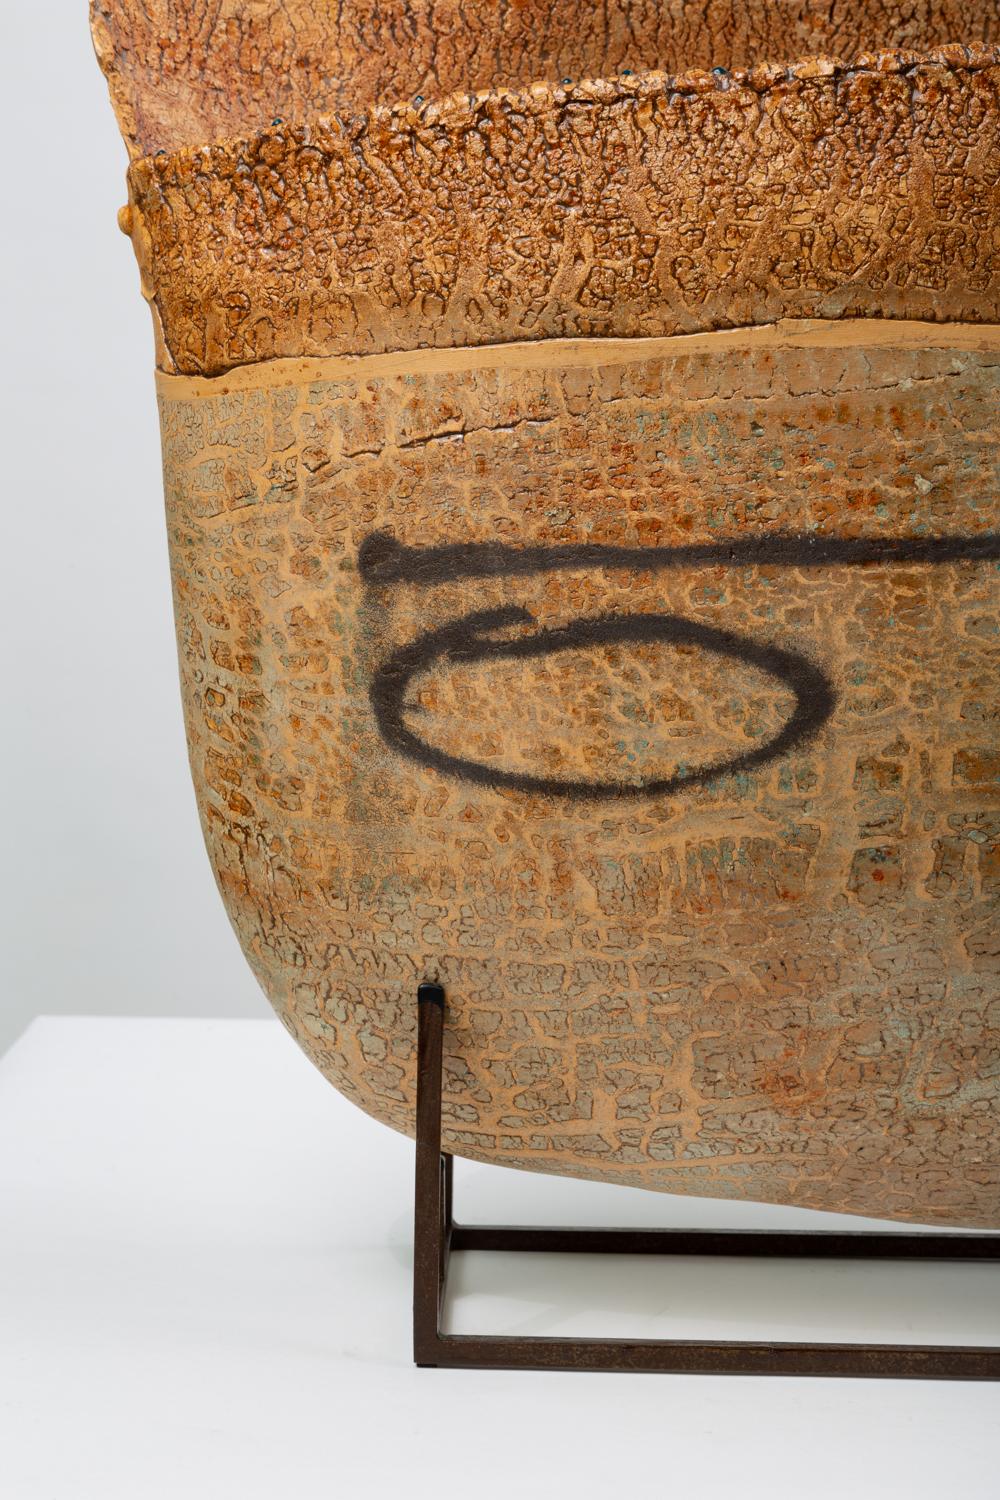 20th Century Ceramic Art Vessel with Mount by Jim Kraft